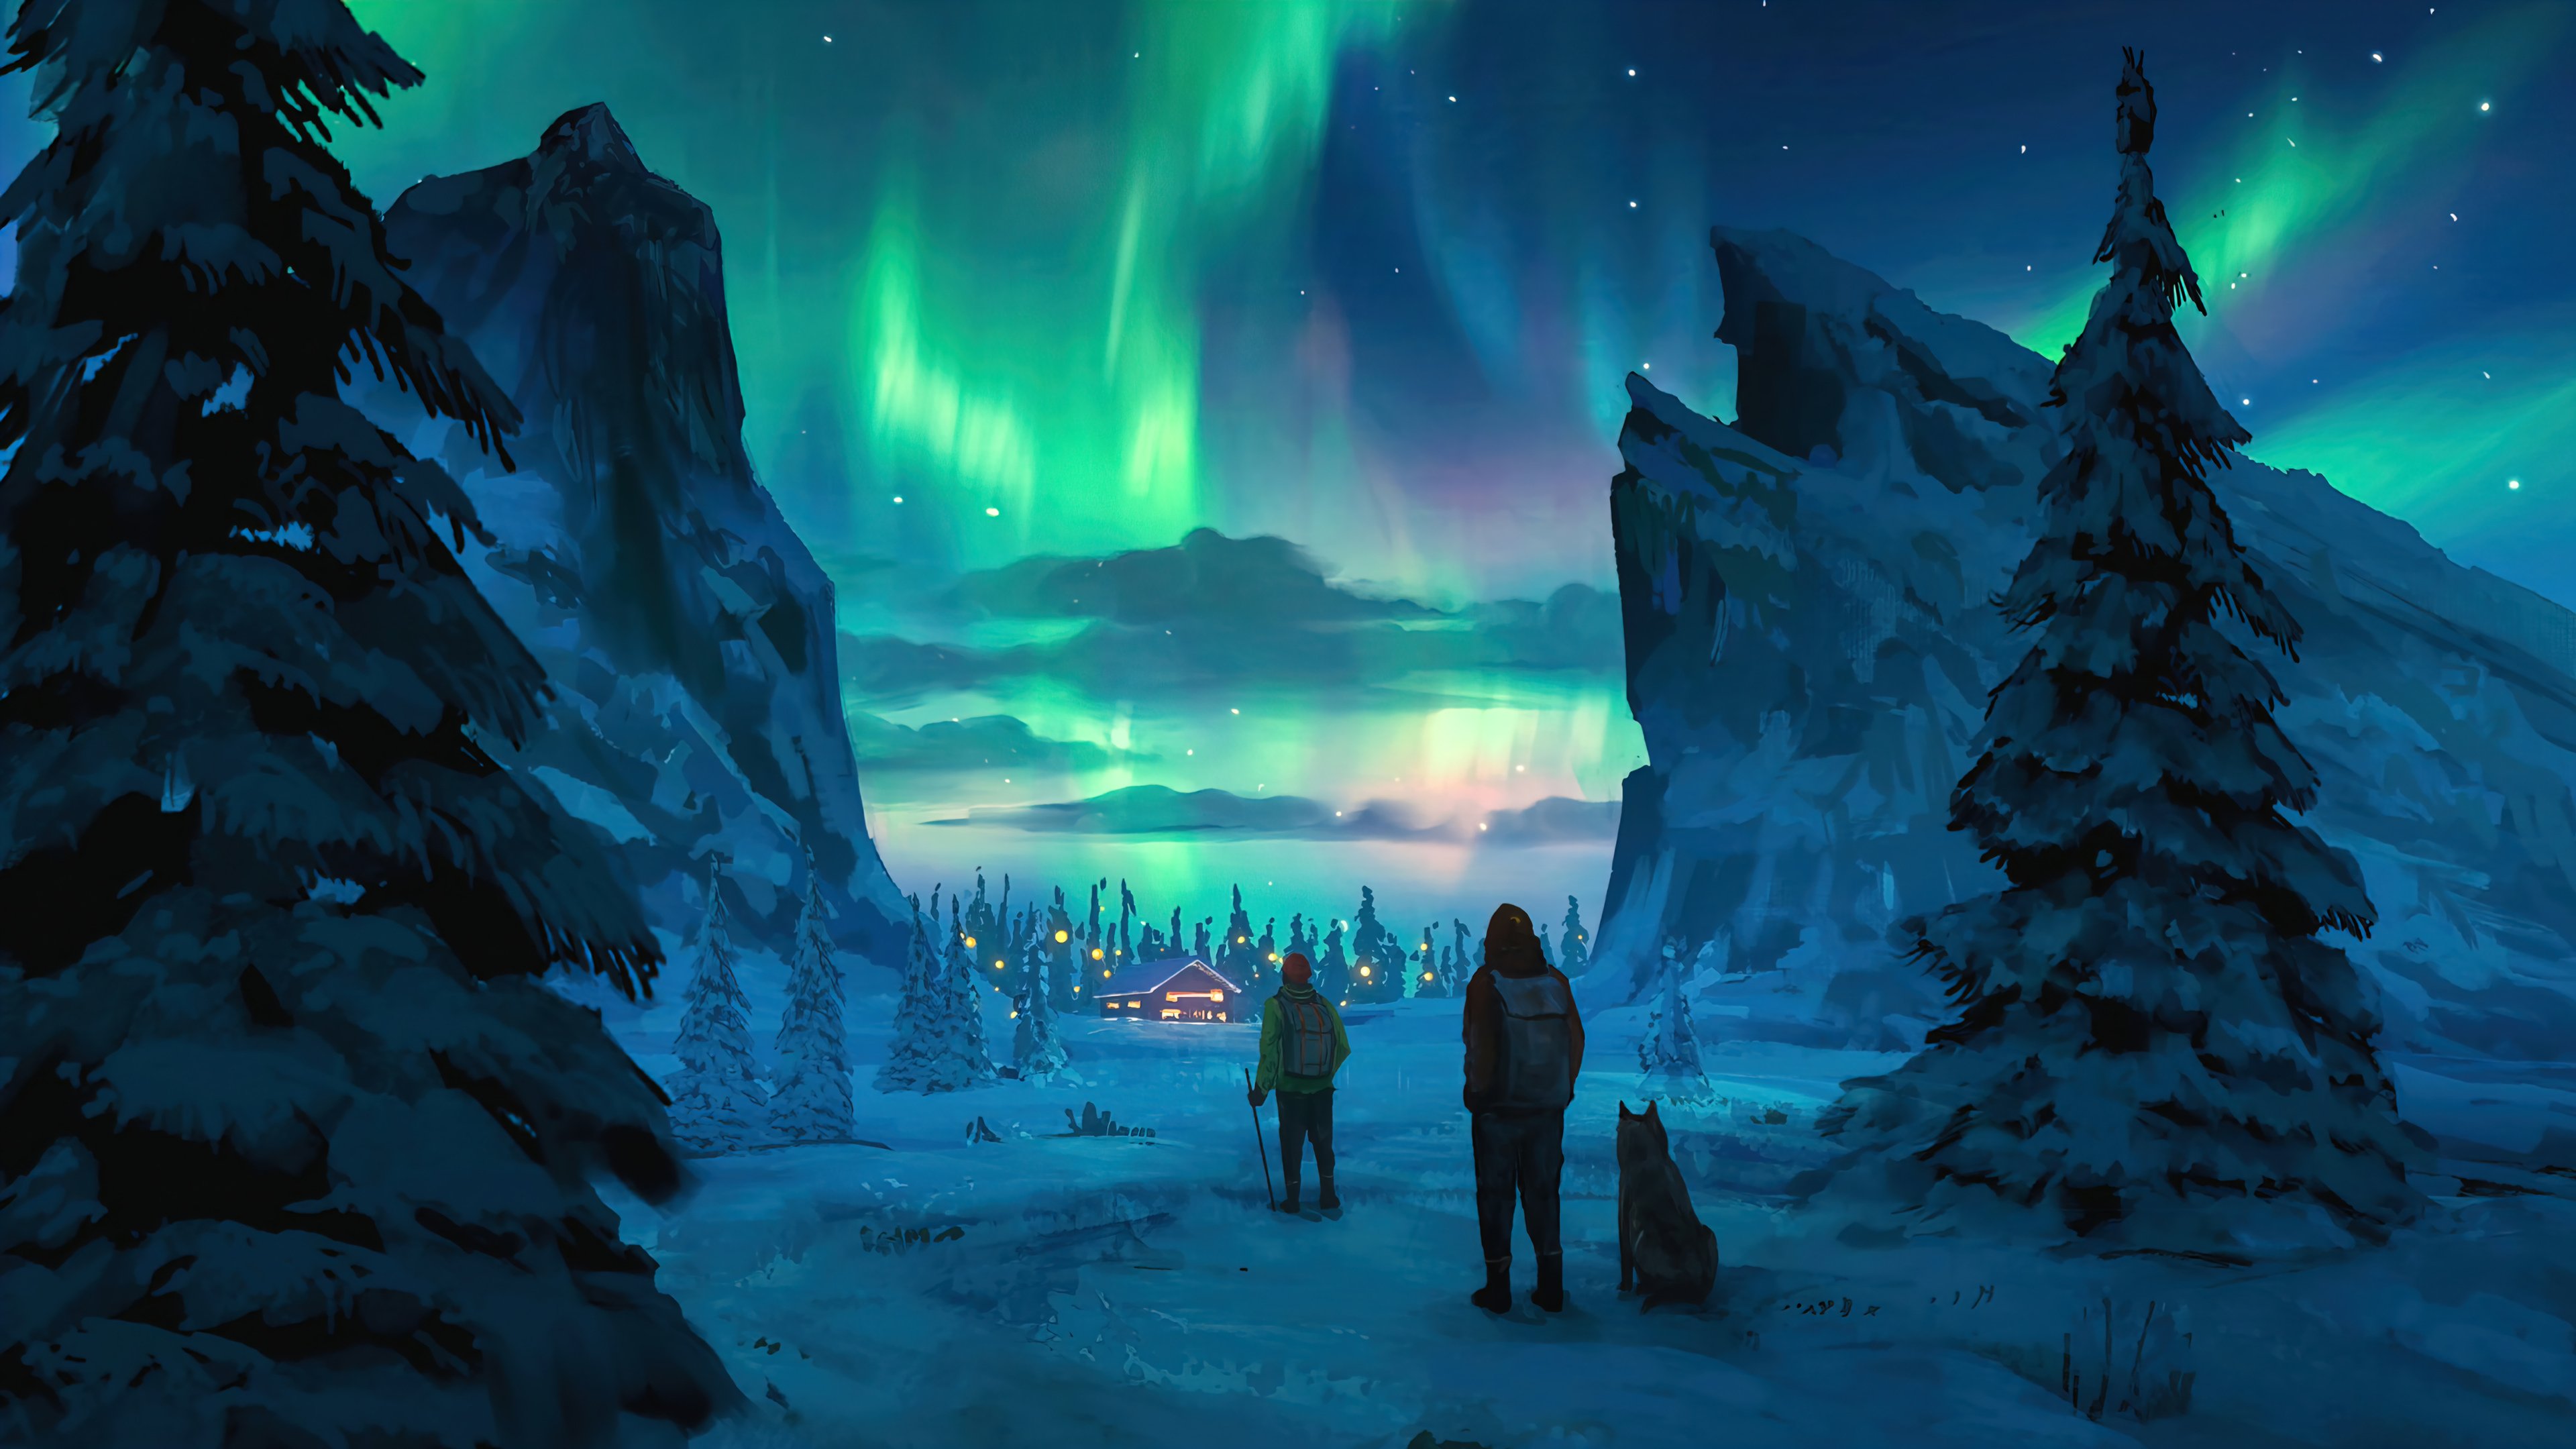 Aurora Borealis in the night sky Digital Art Wallpaper 4k Ultra HD